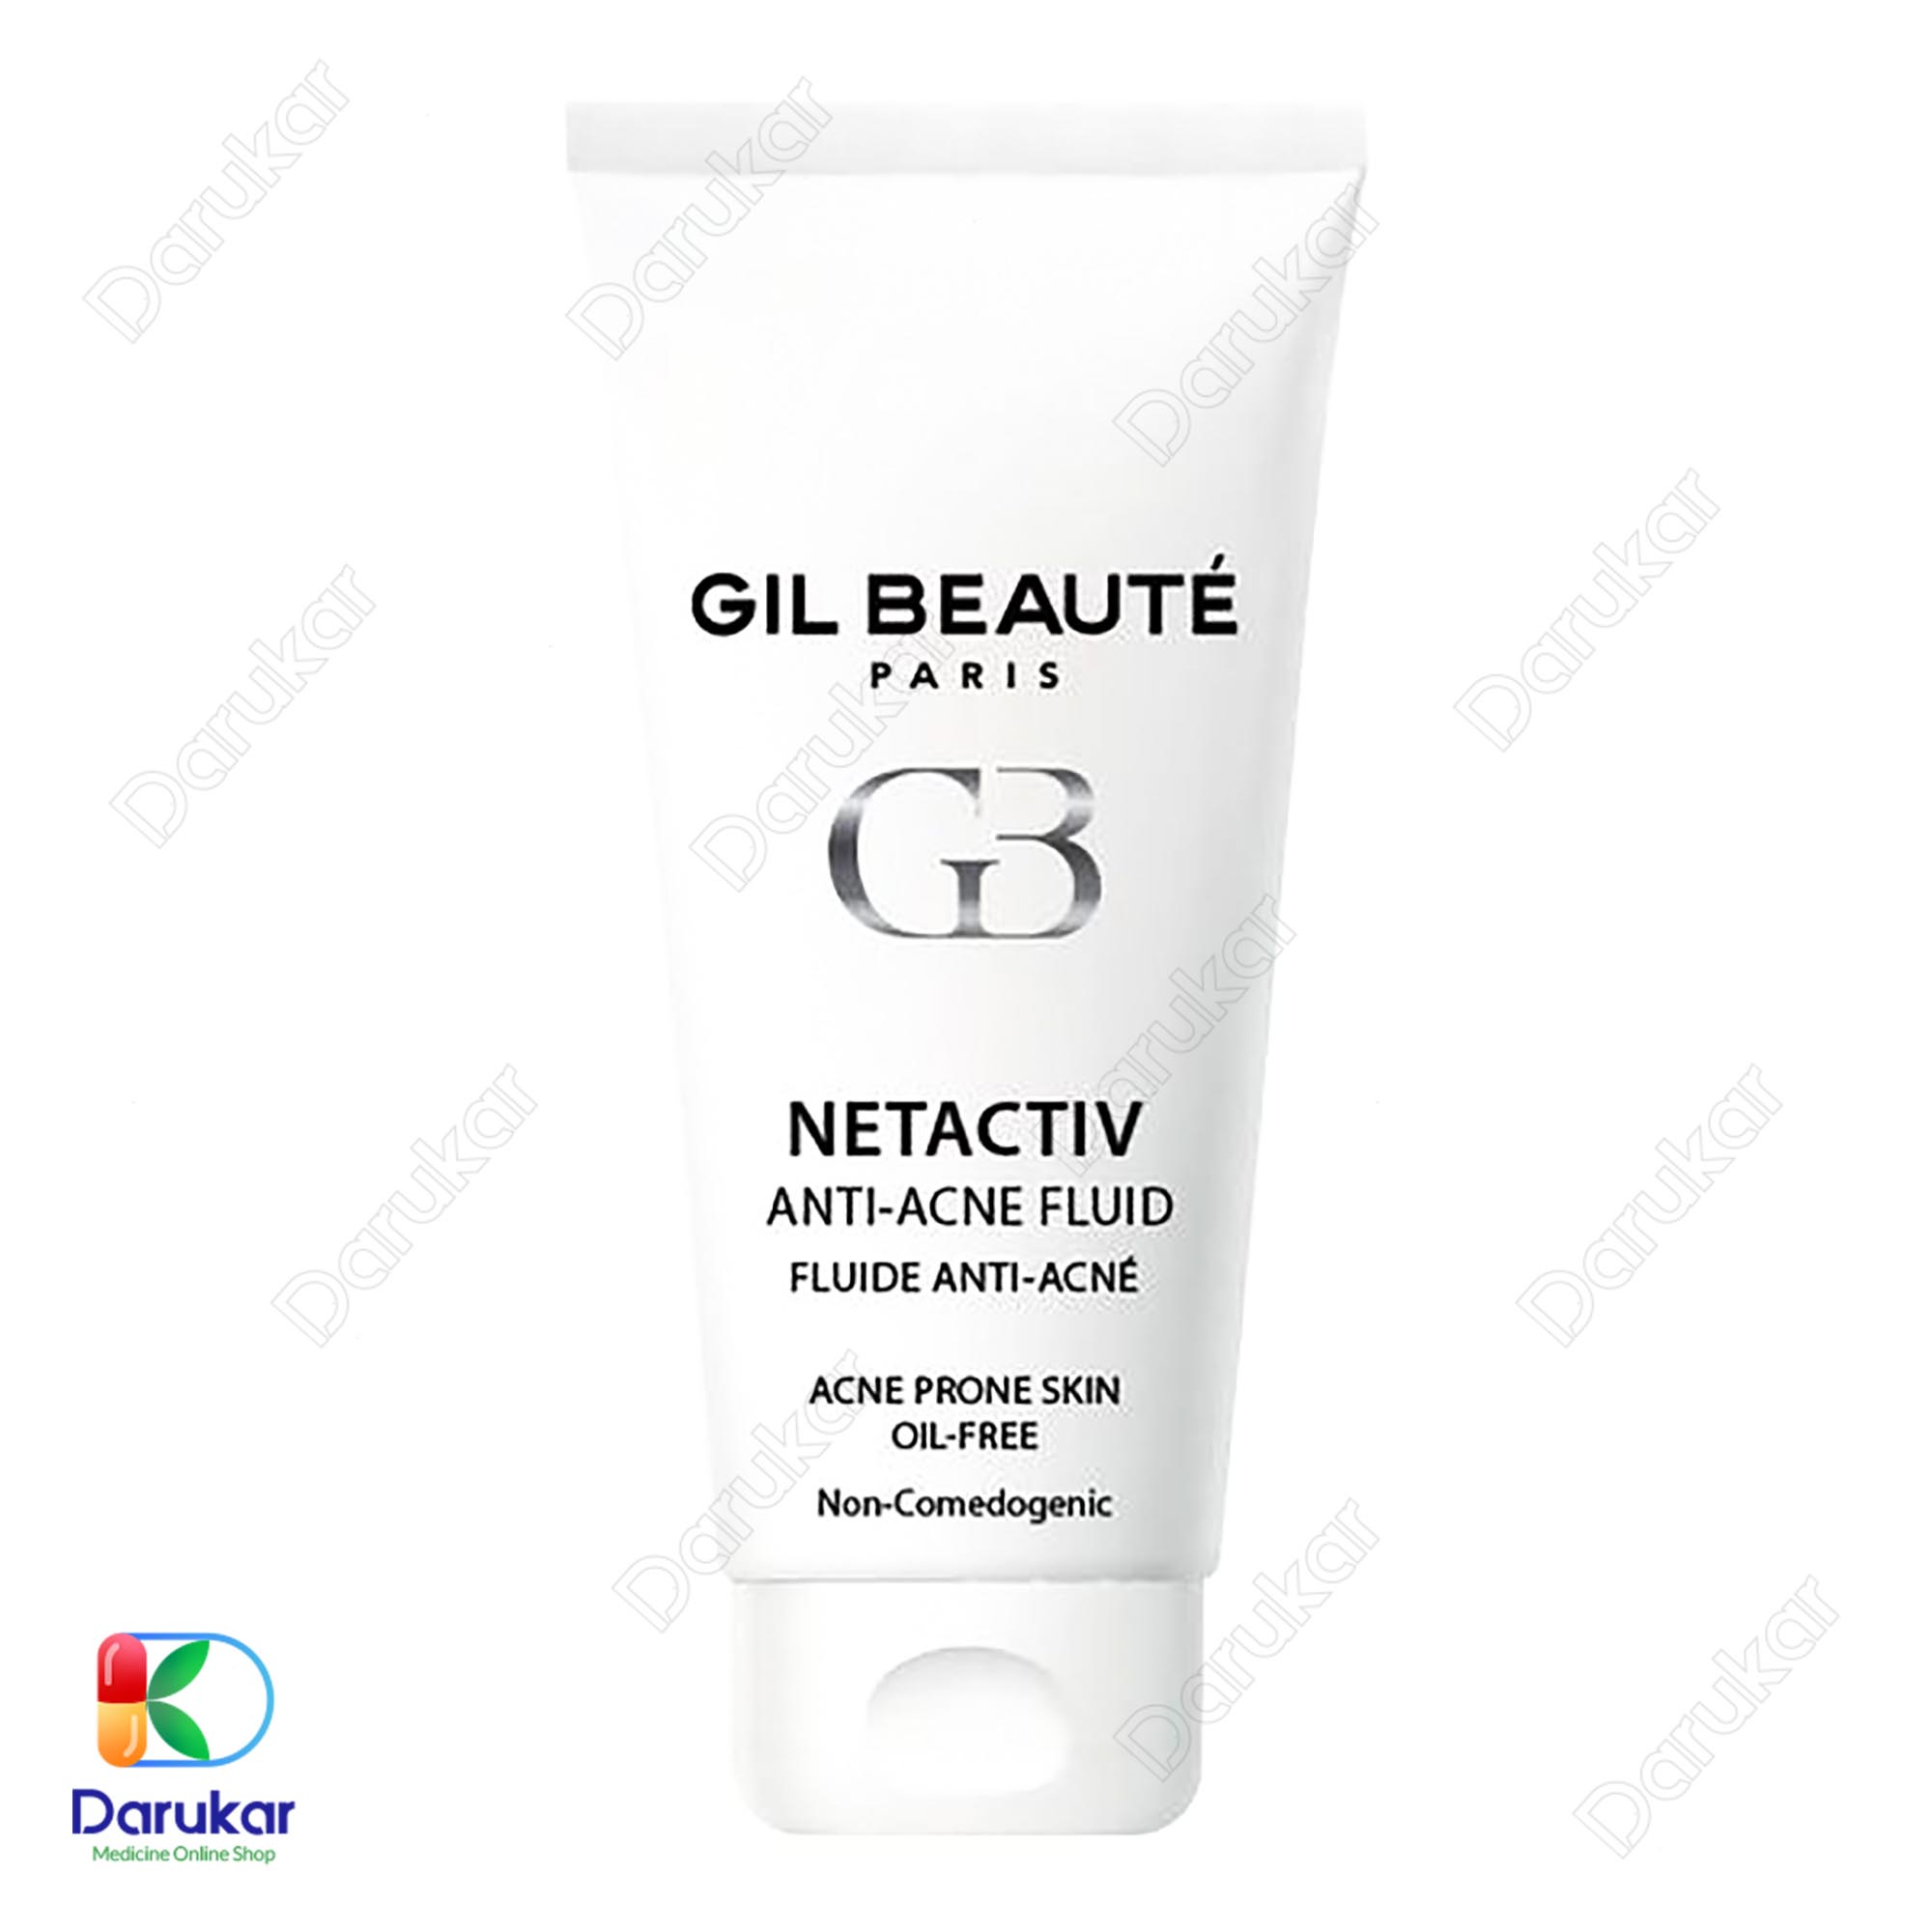 Gil Beaute Netactive Anti Acne Fluid 2